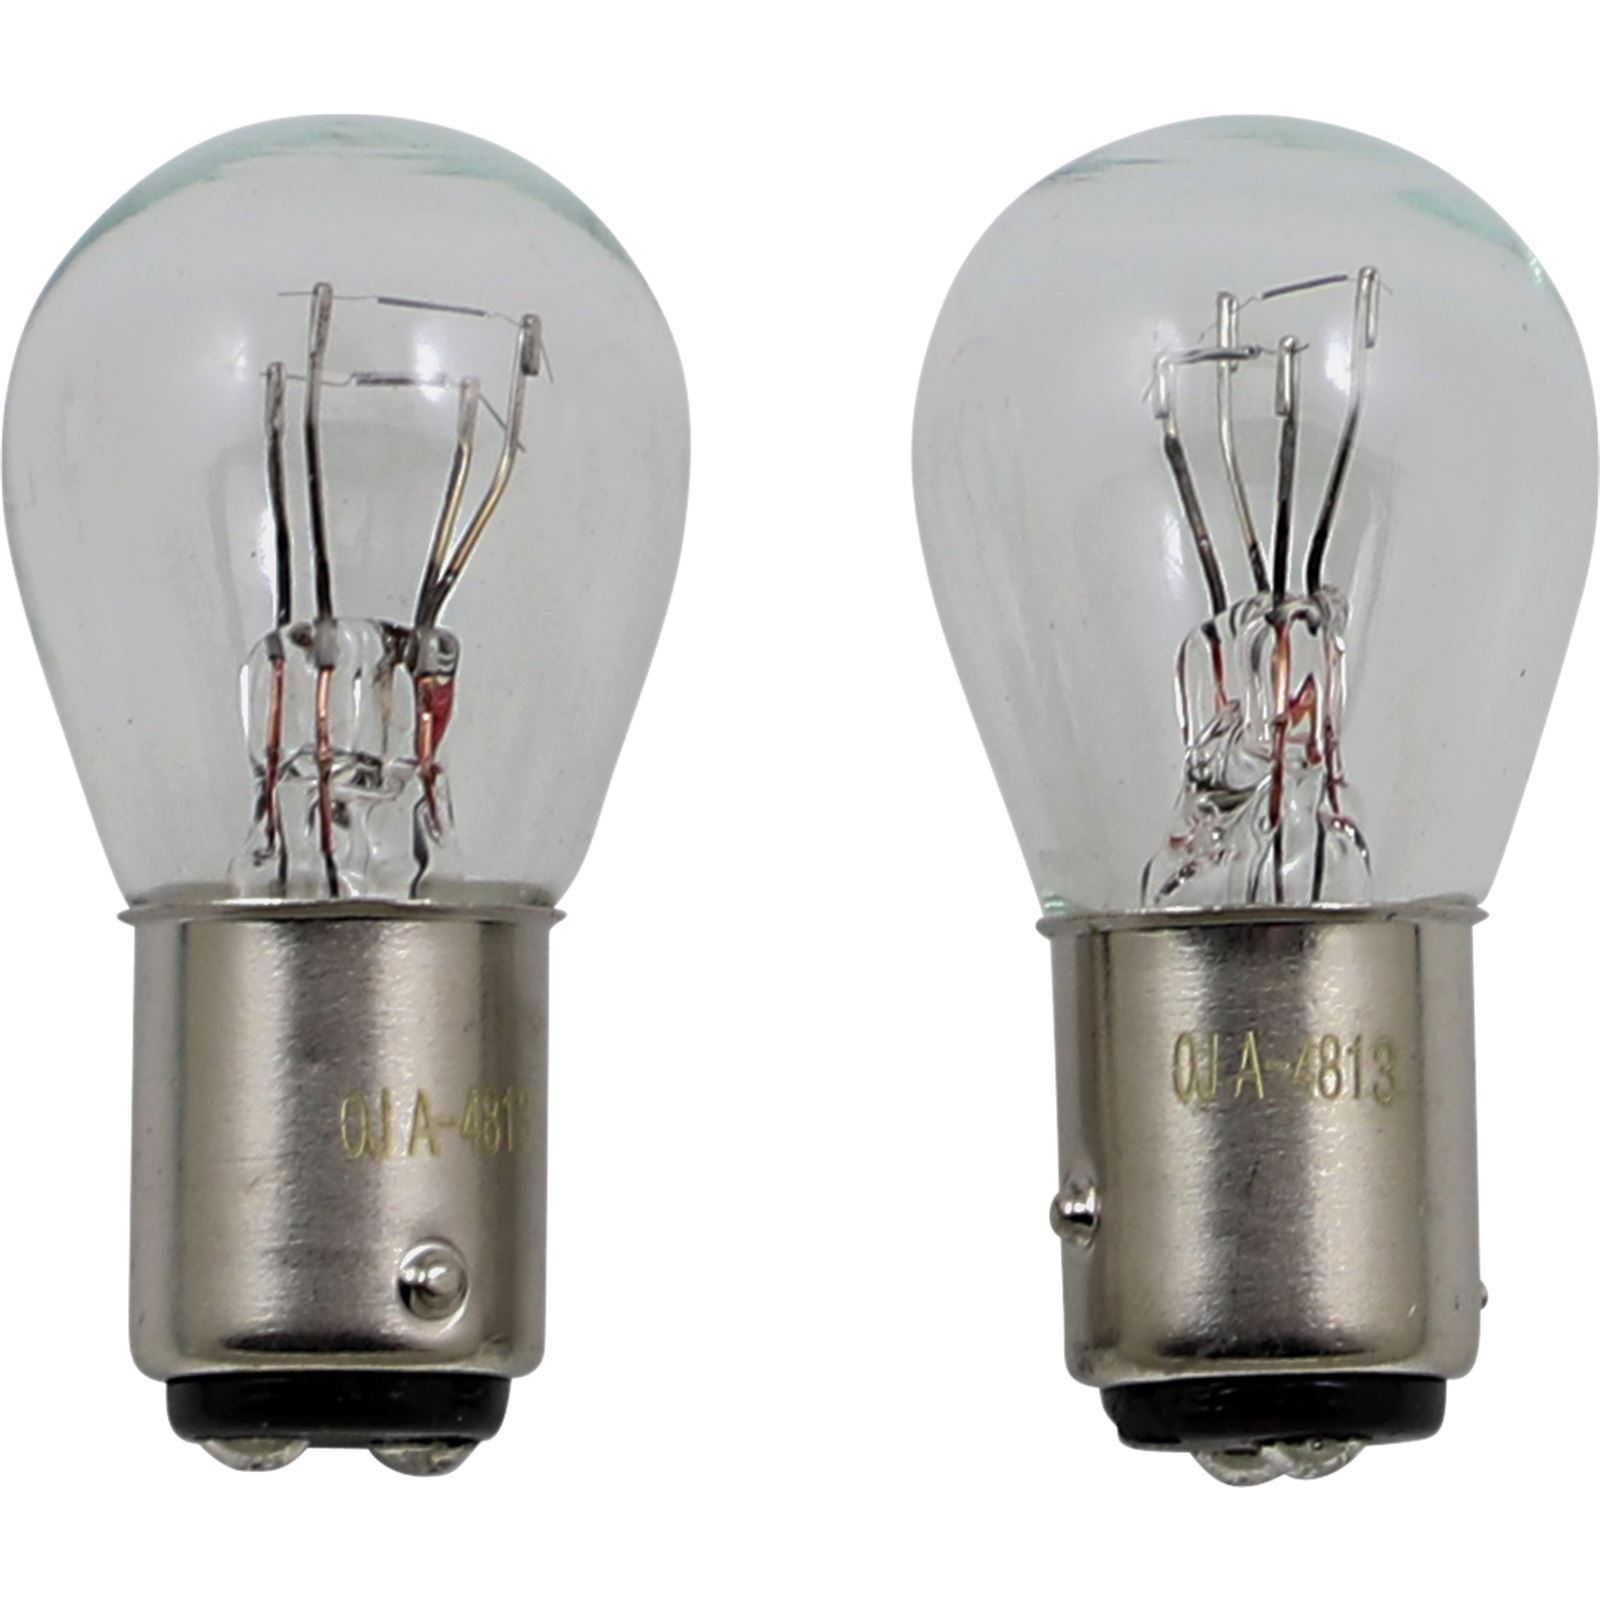 Peak Lighting Miniature Bulb - A-4813